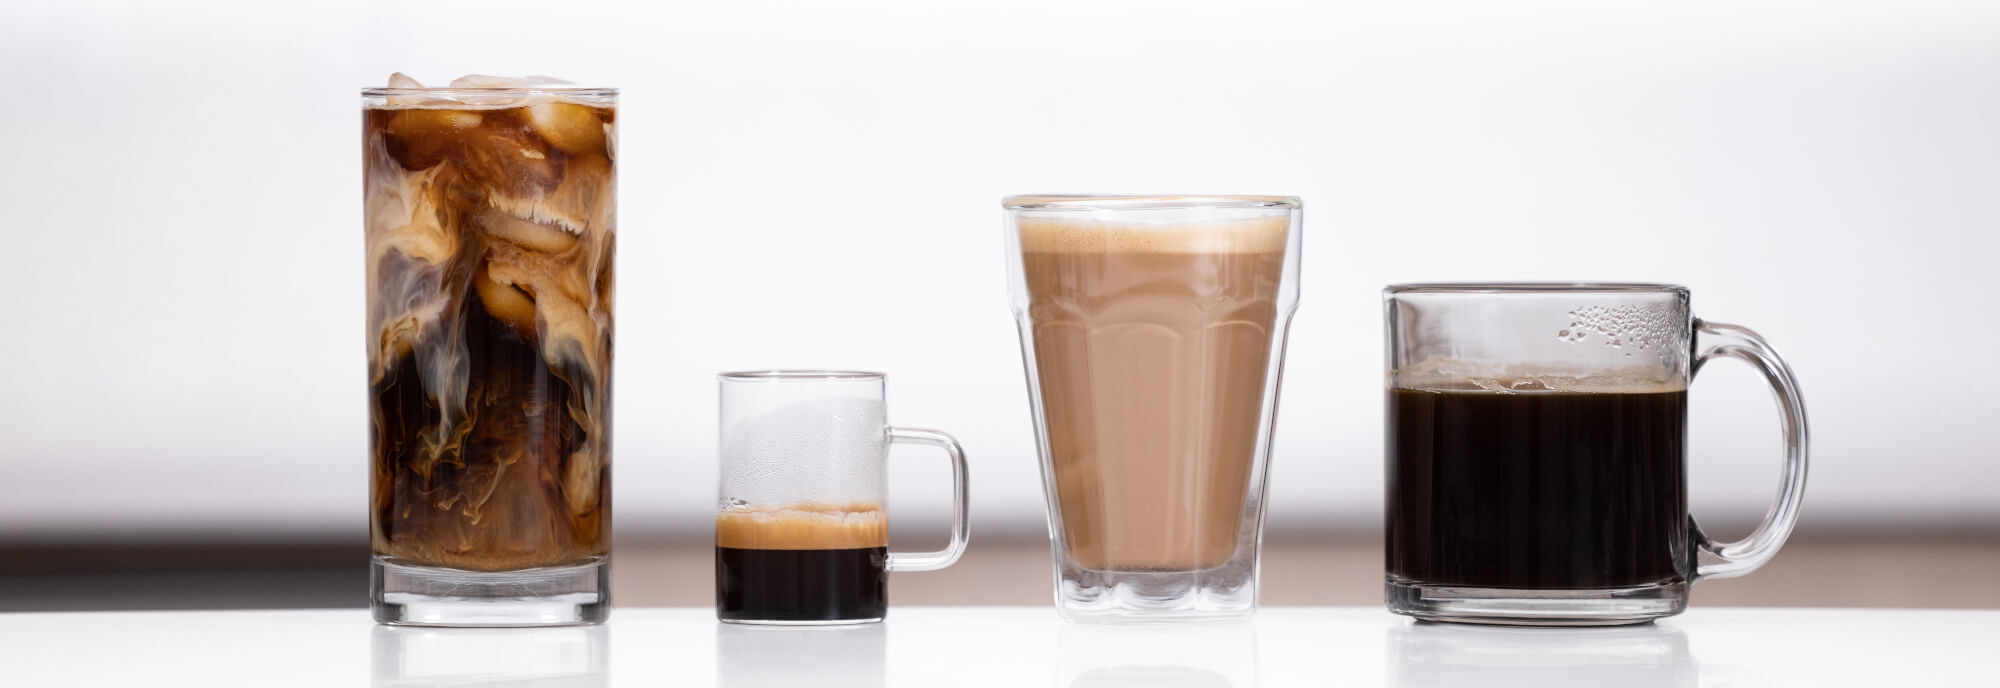 AeroPress Coffee Maker – Mauch Chunk Coffee Co.